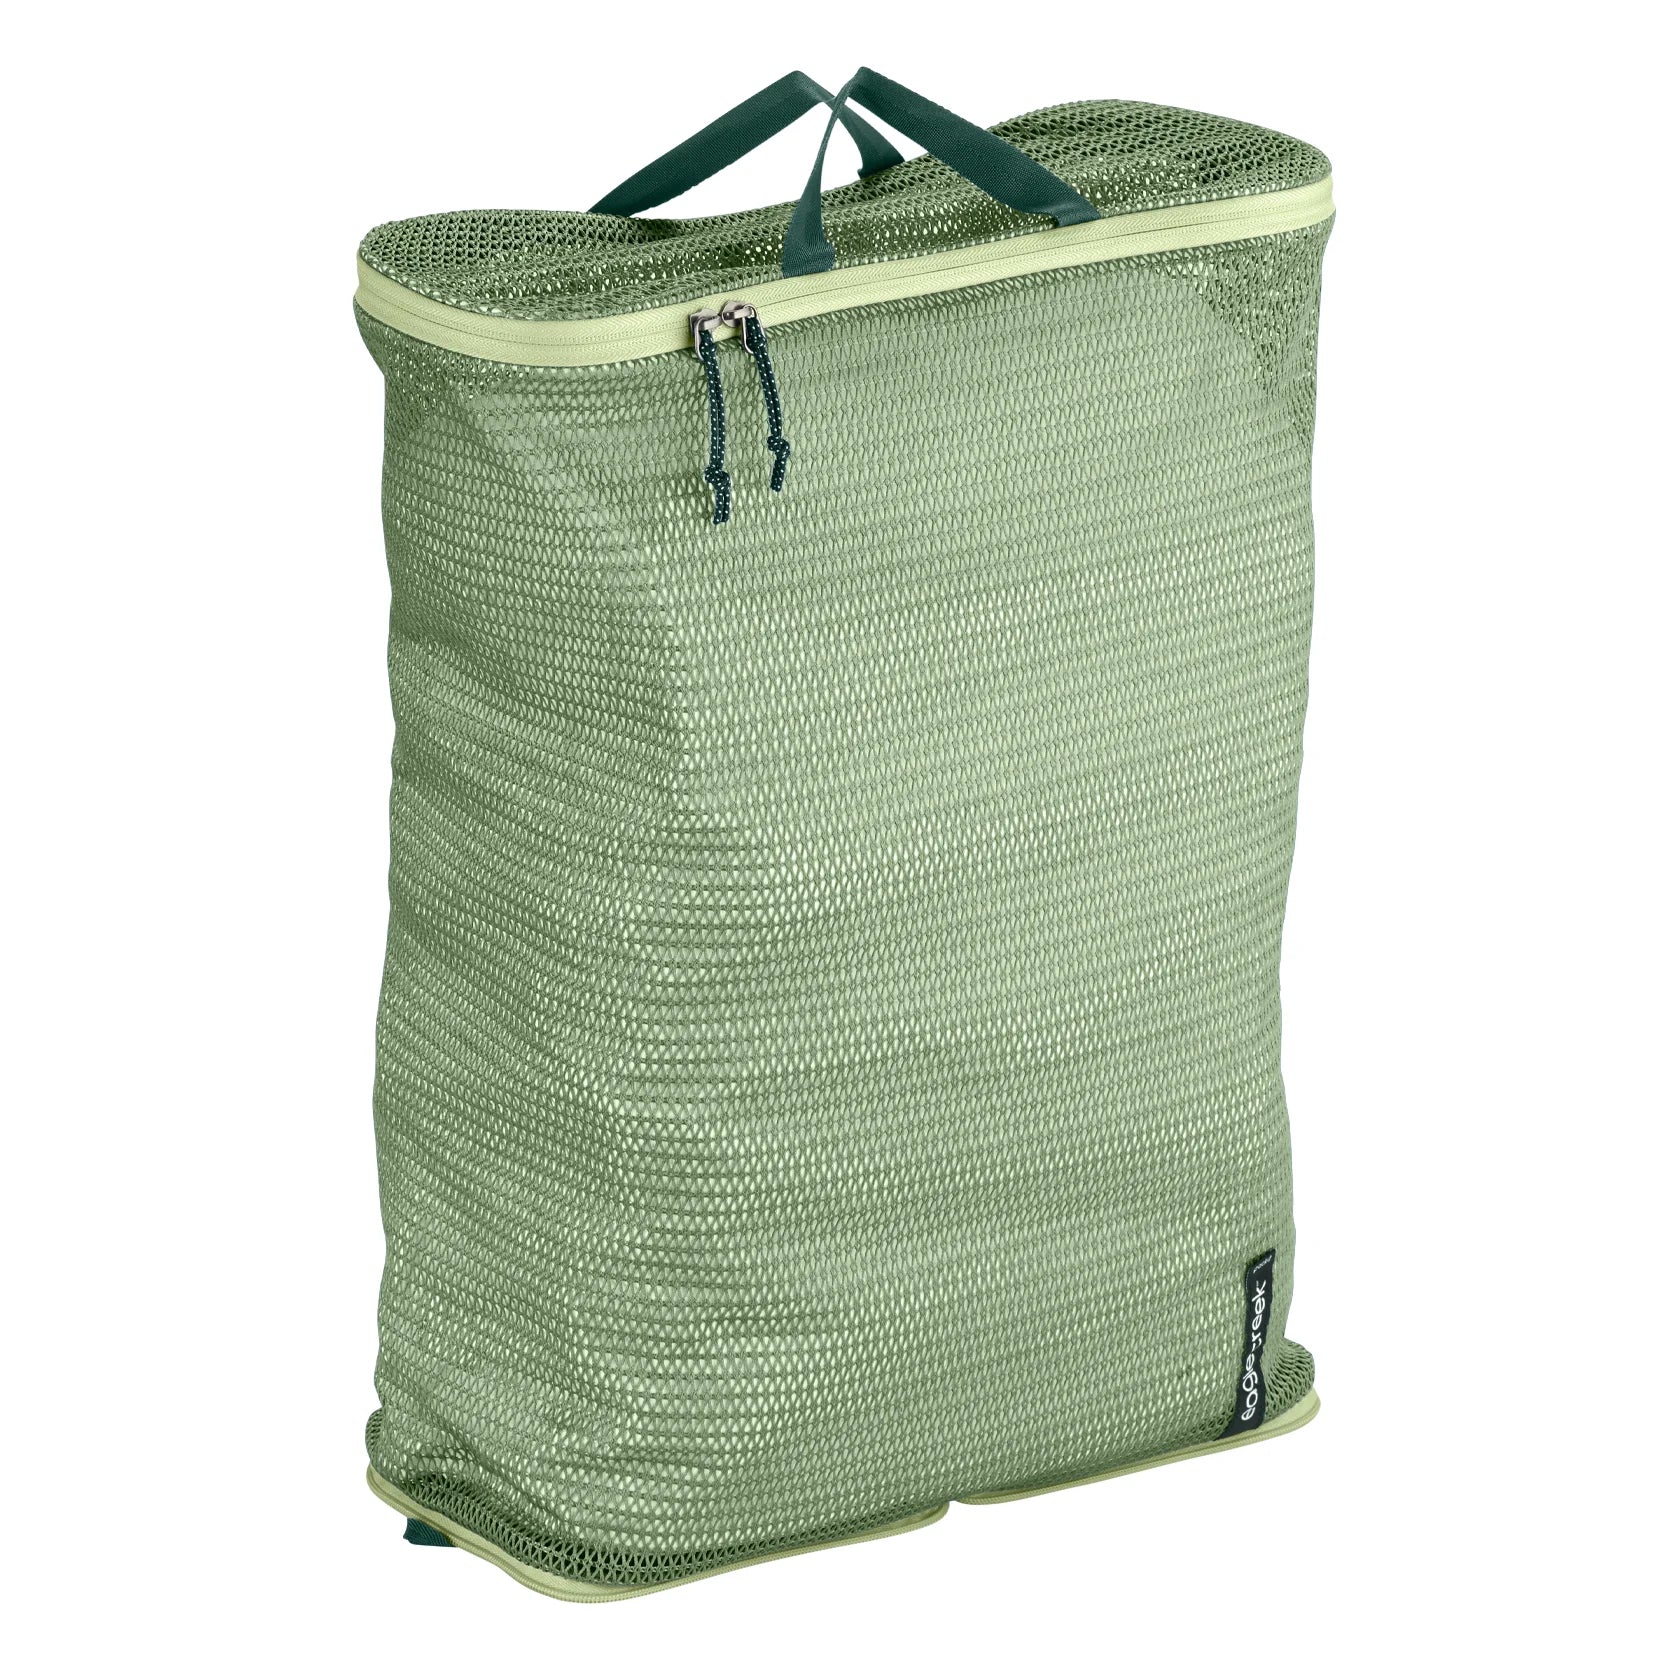 Eagle Creek Pack-It Reveal sac à linge 52 cm - vert mousse